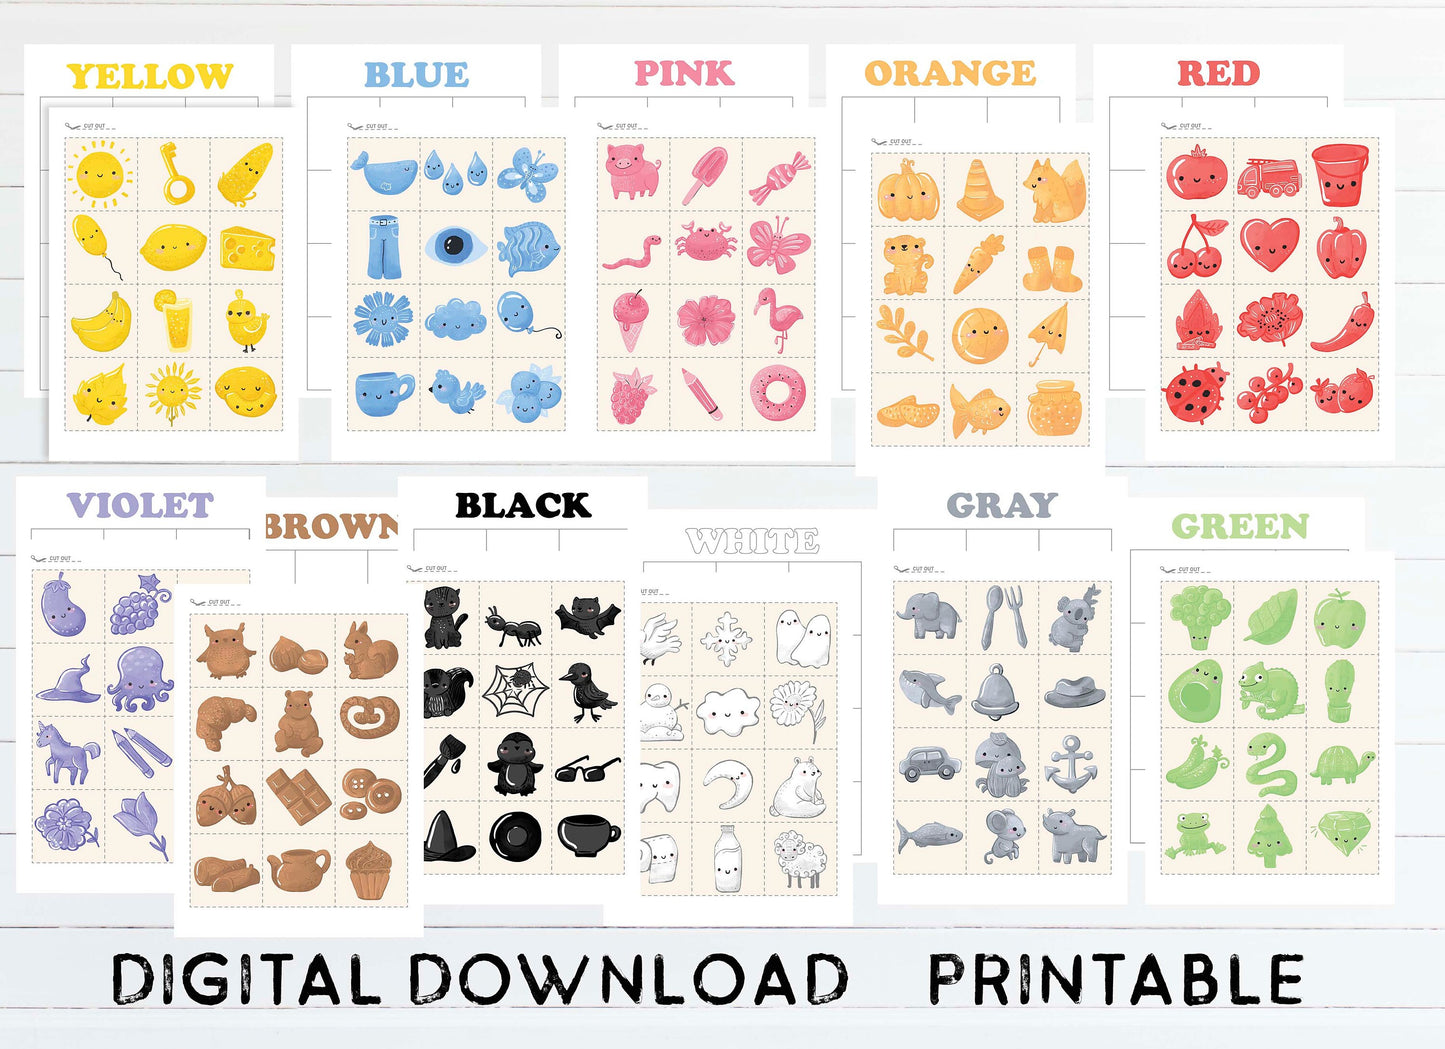 Color Sorting Activity Sheets Matching Game Toddler Homeschool Preschool Printable Montessori Materials, DD02